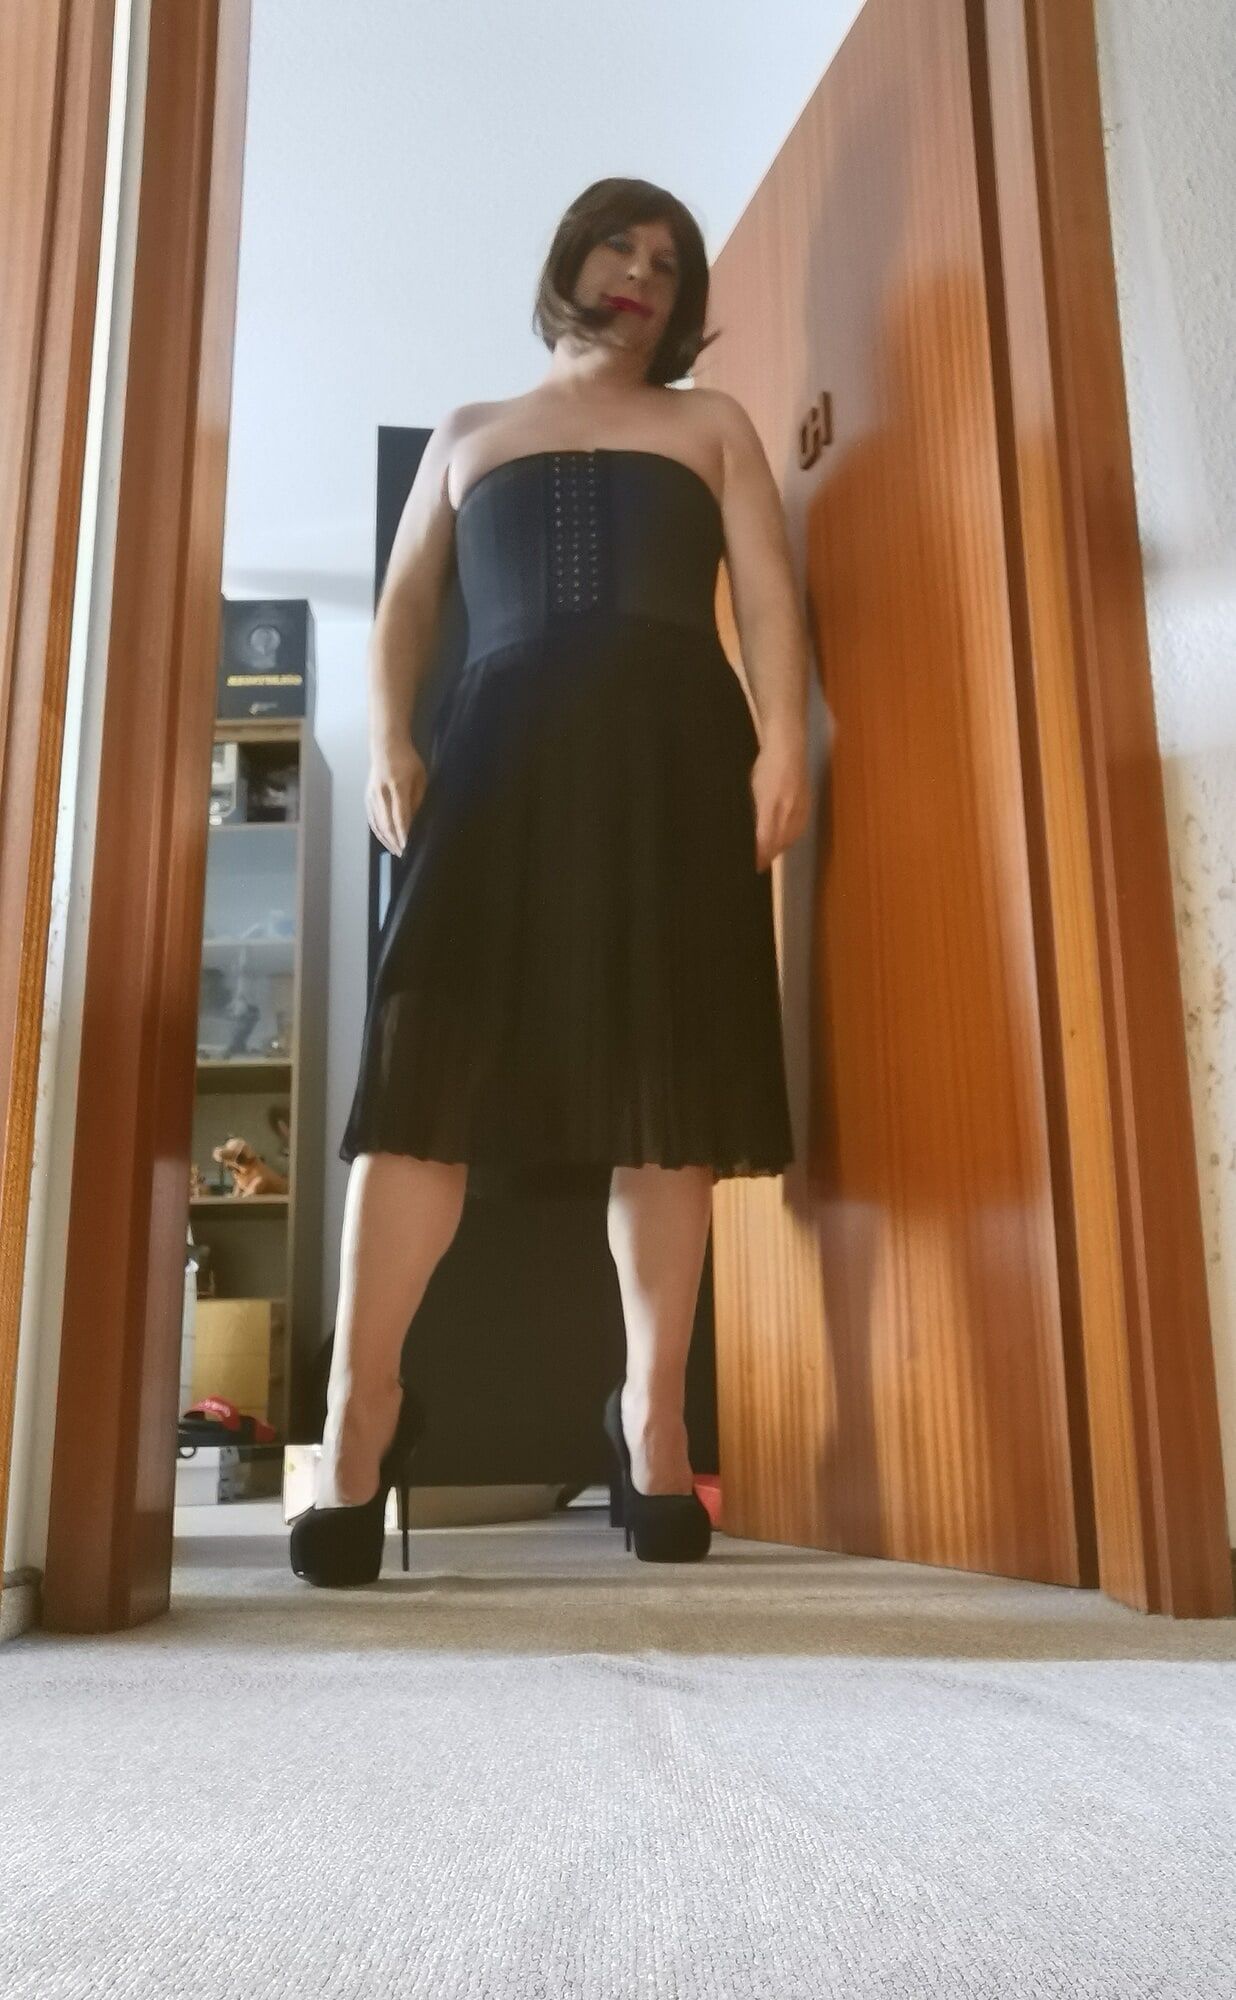 Posing Sexy Wearing Black Skirt, Platform Heels And Wig